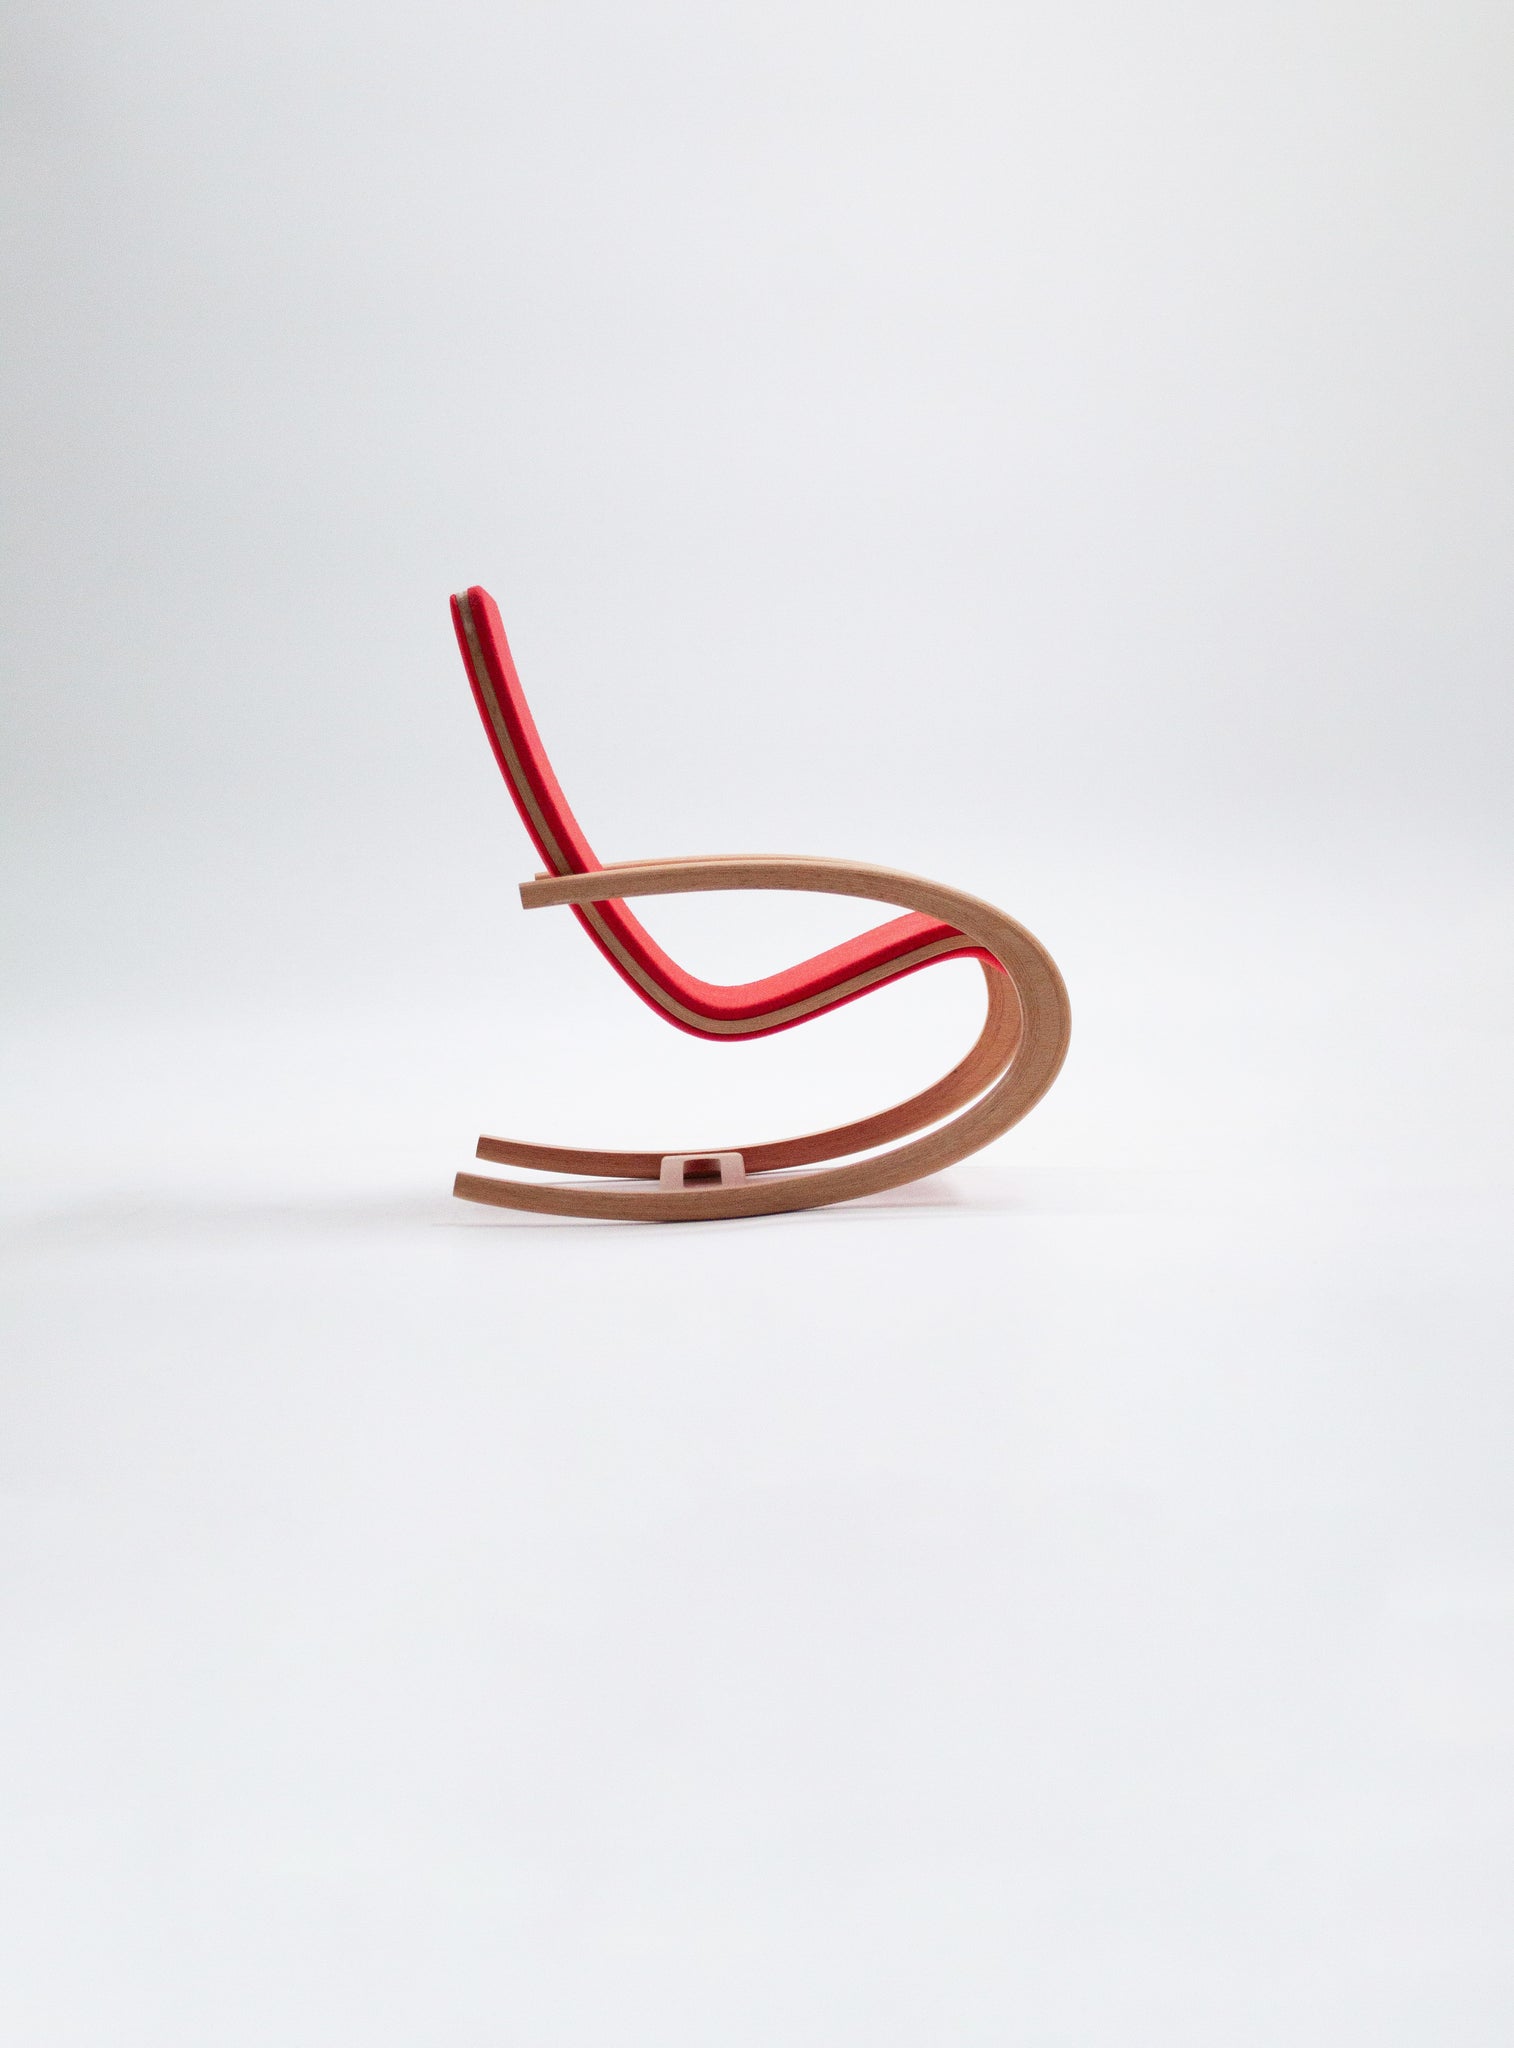 Handmade Miniature Chair 19 by Hans Frost Nielsen